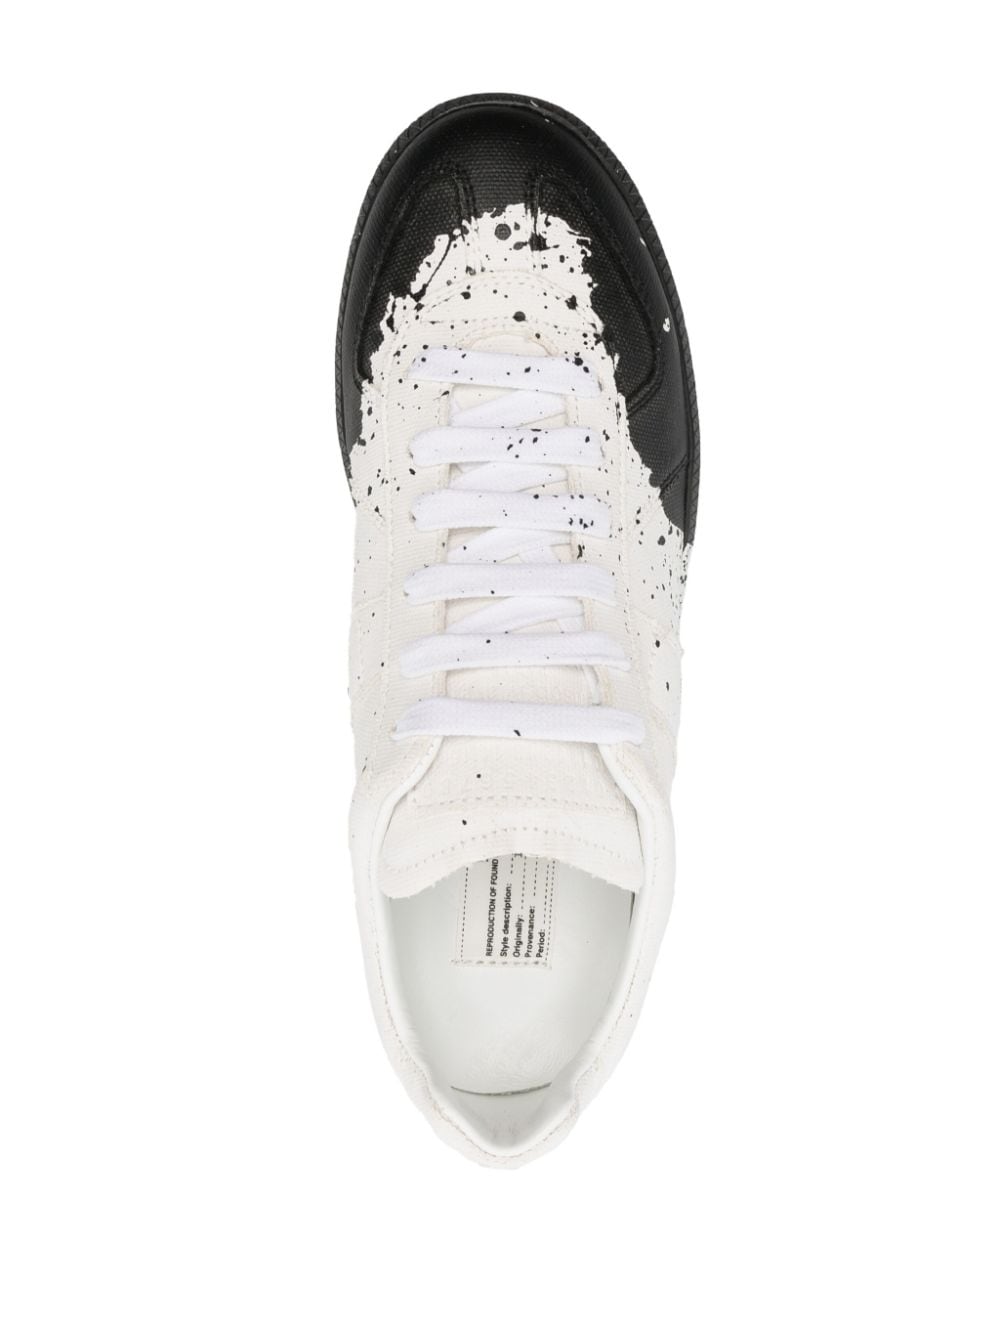 Maison Margiela Replica Paint Splash Low Top Sneaker In White | ModeSens